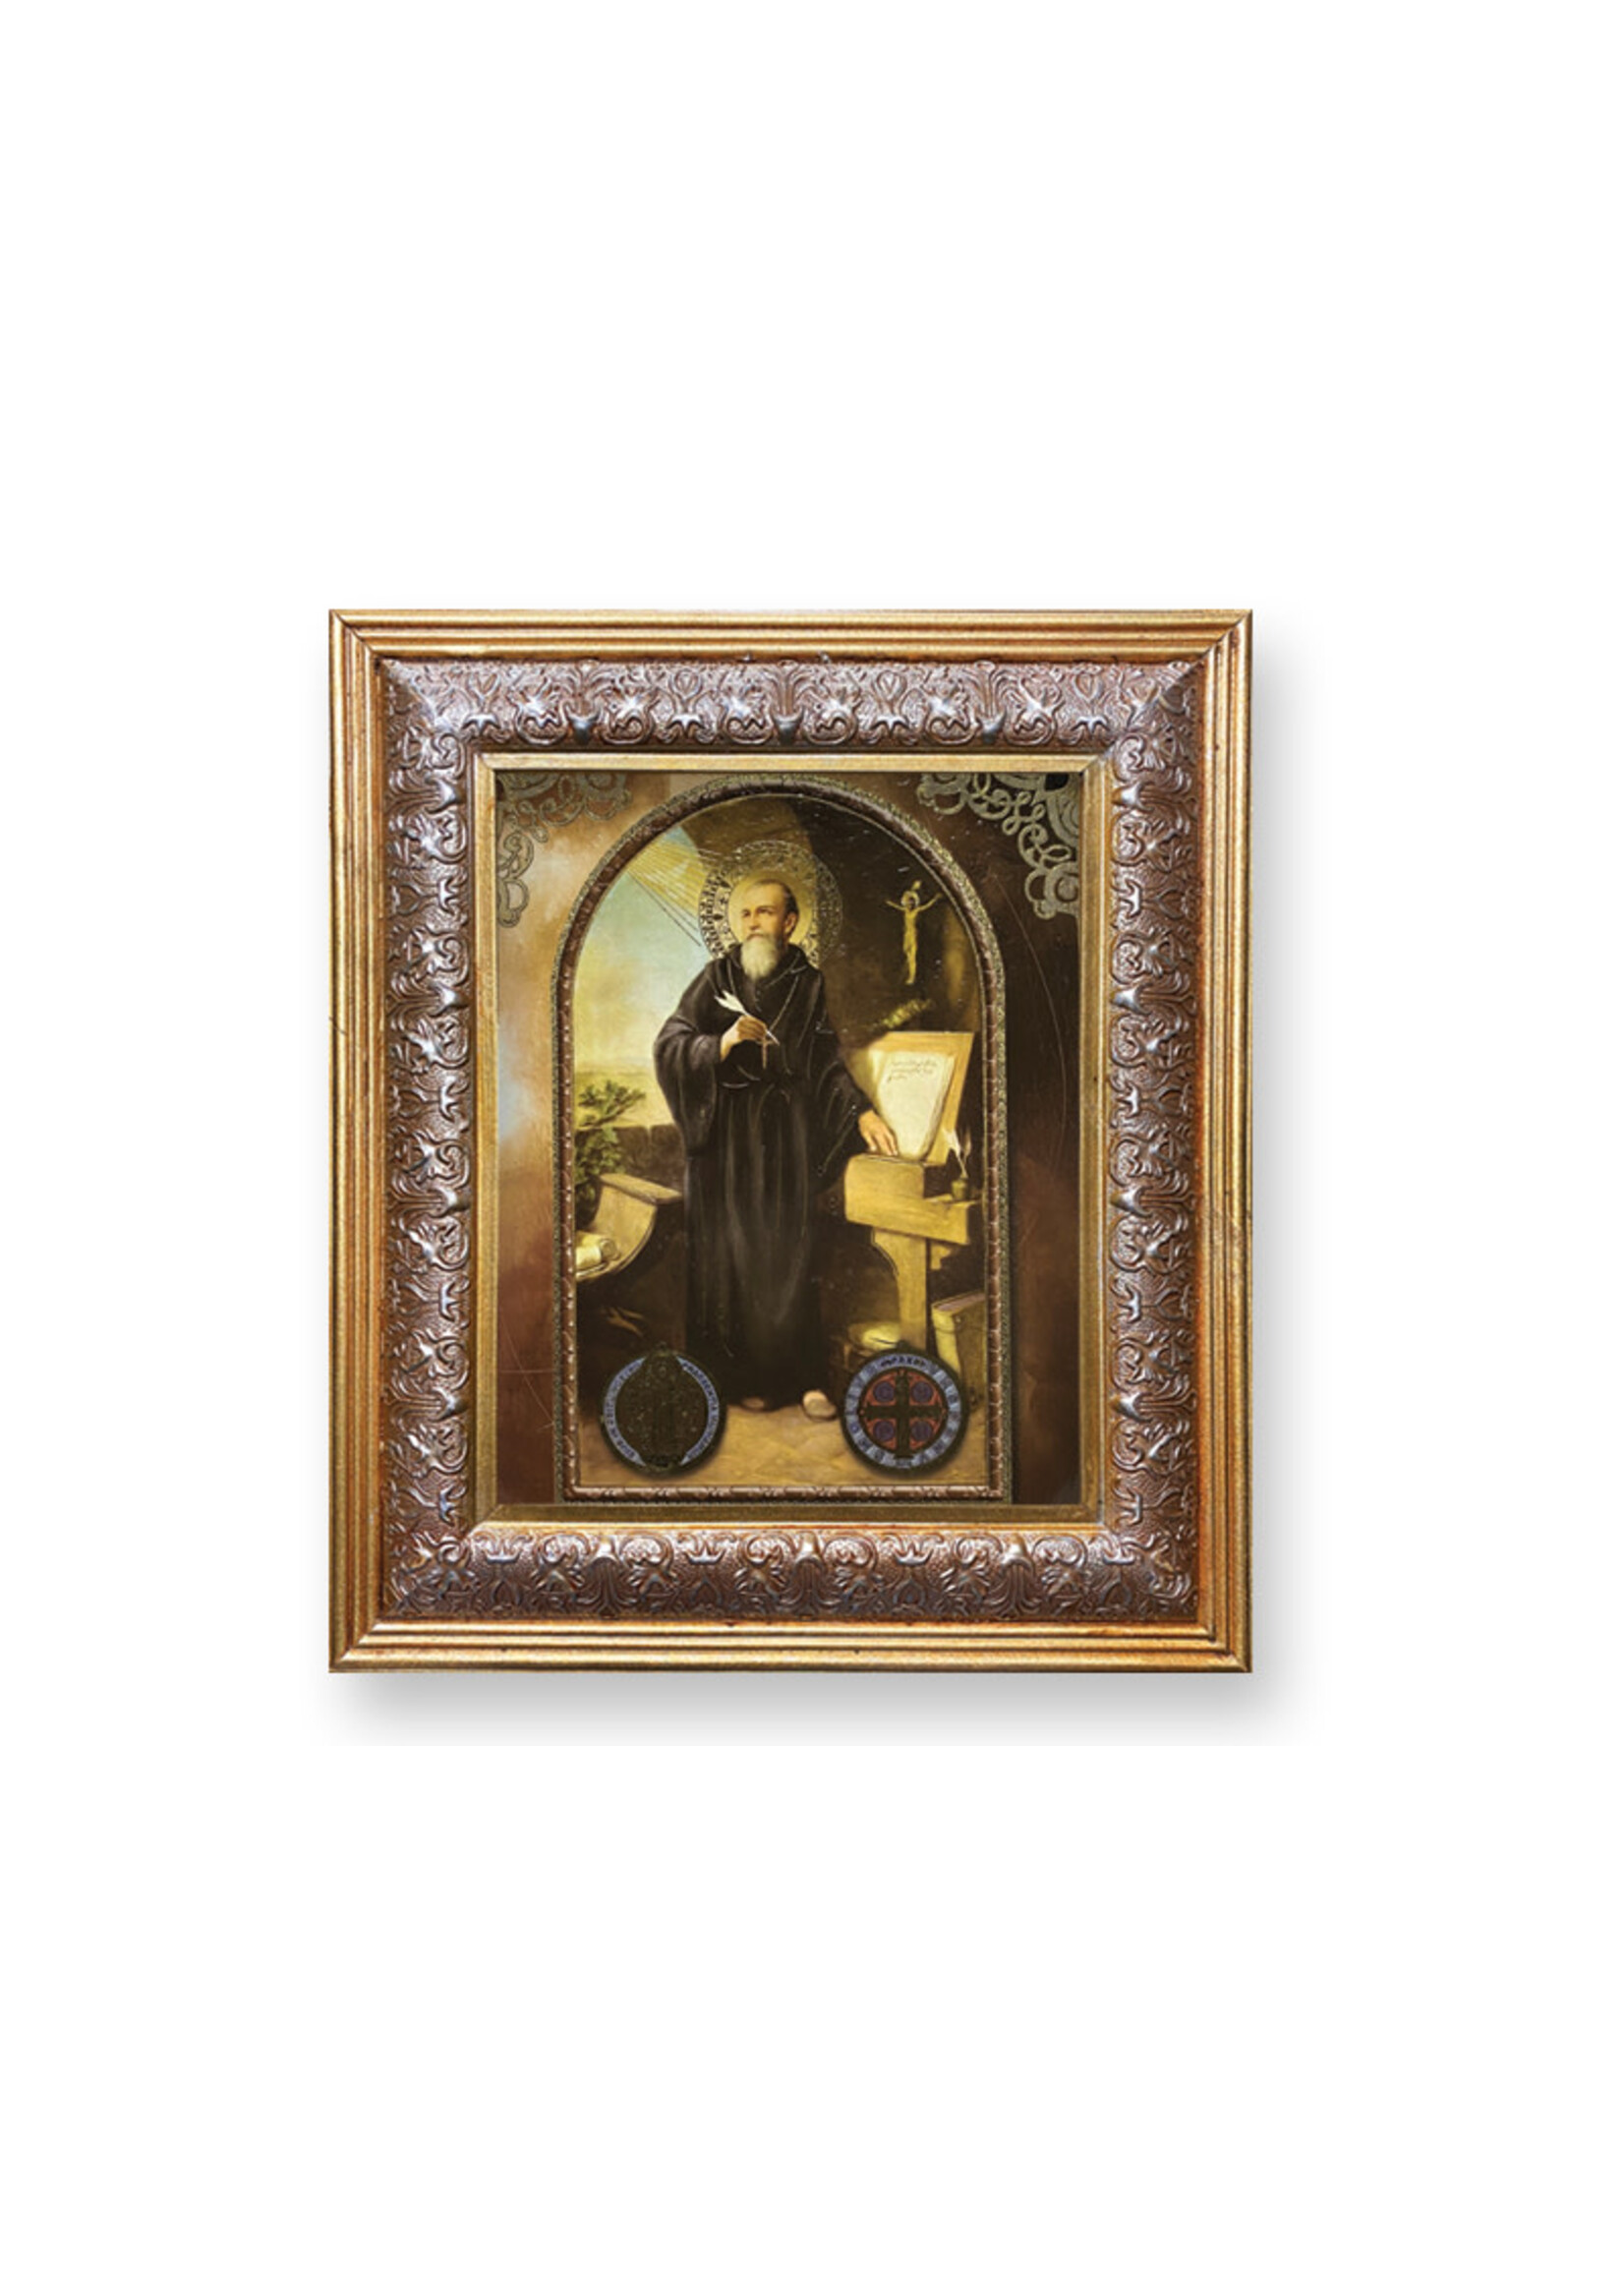 Saint Benedict Framed Image 14.5" x 12.5"